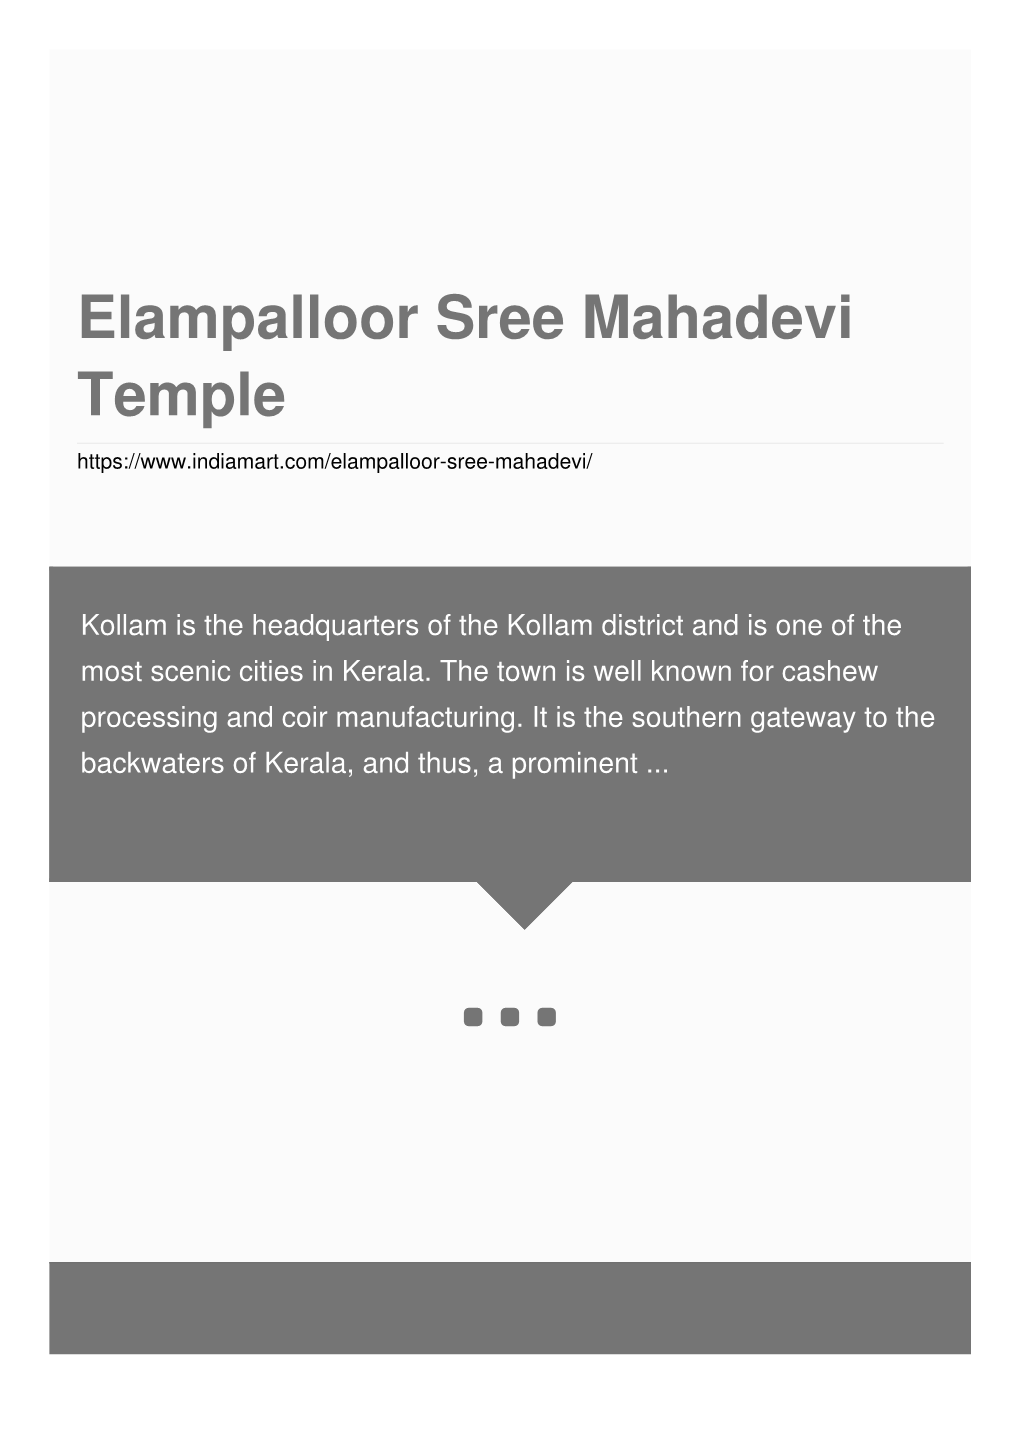 Elampalloor Sree Mahadevi Temple